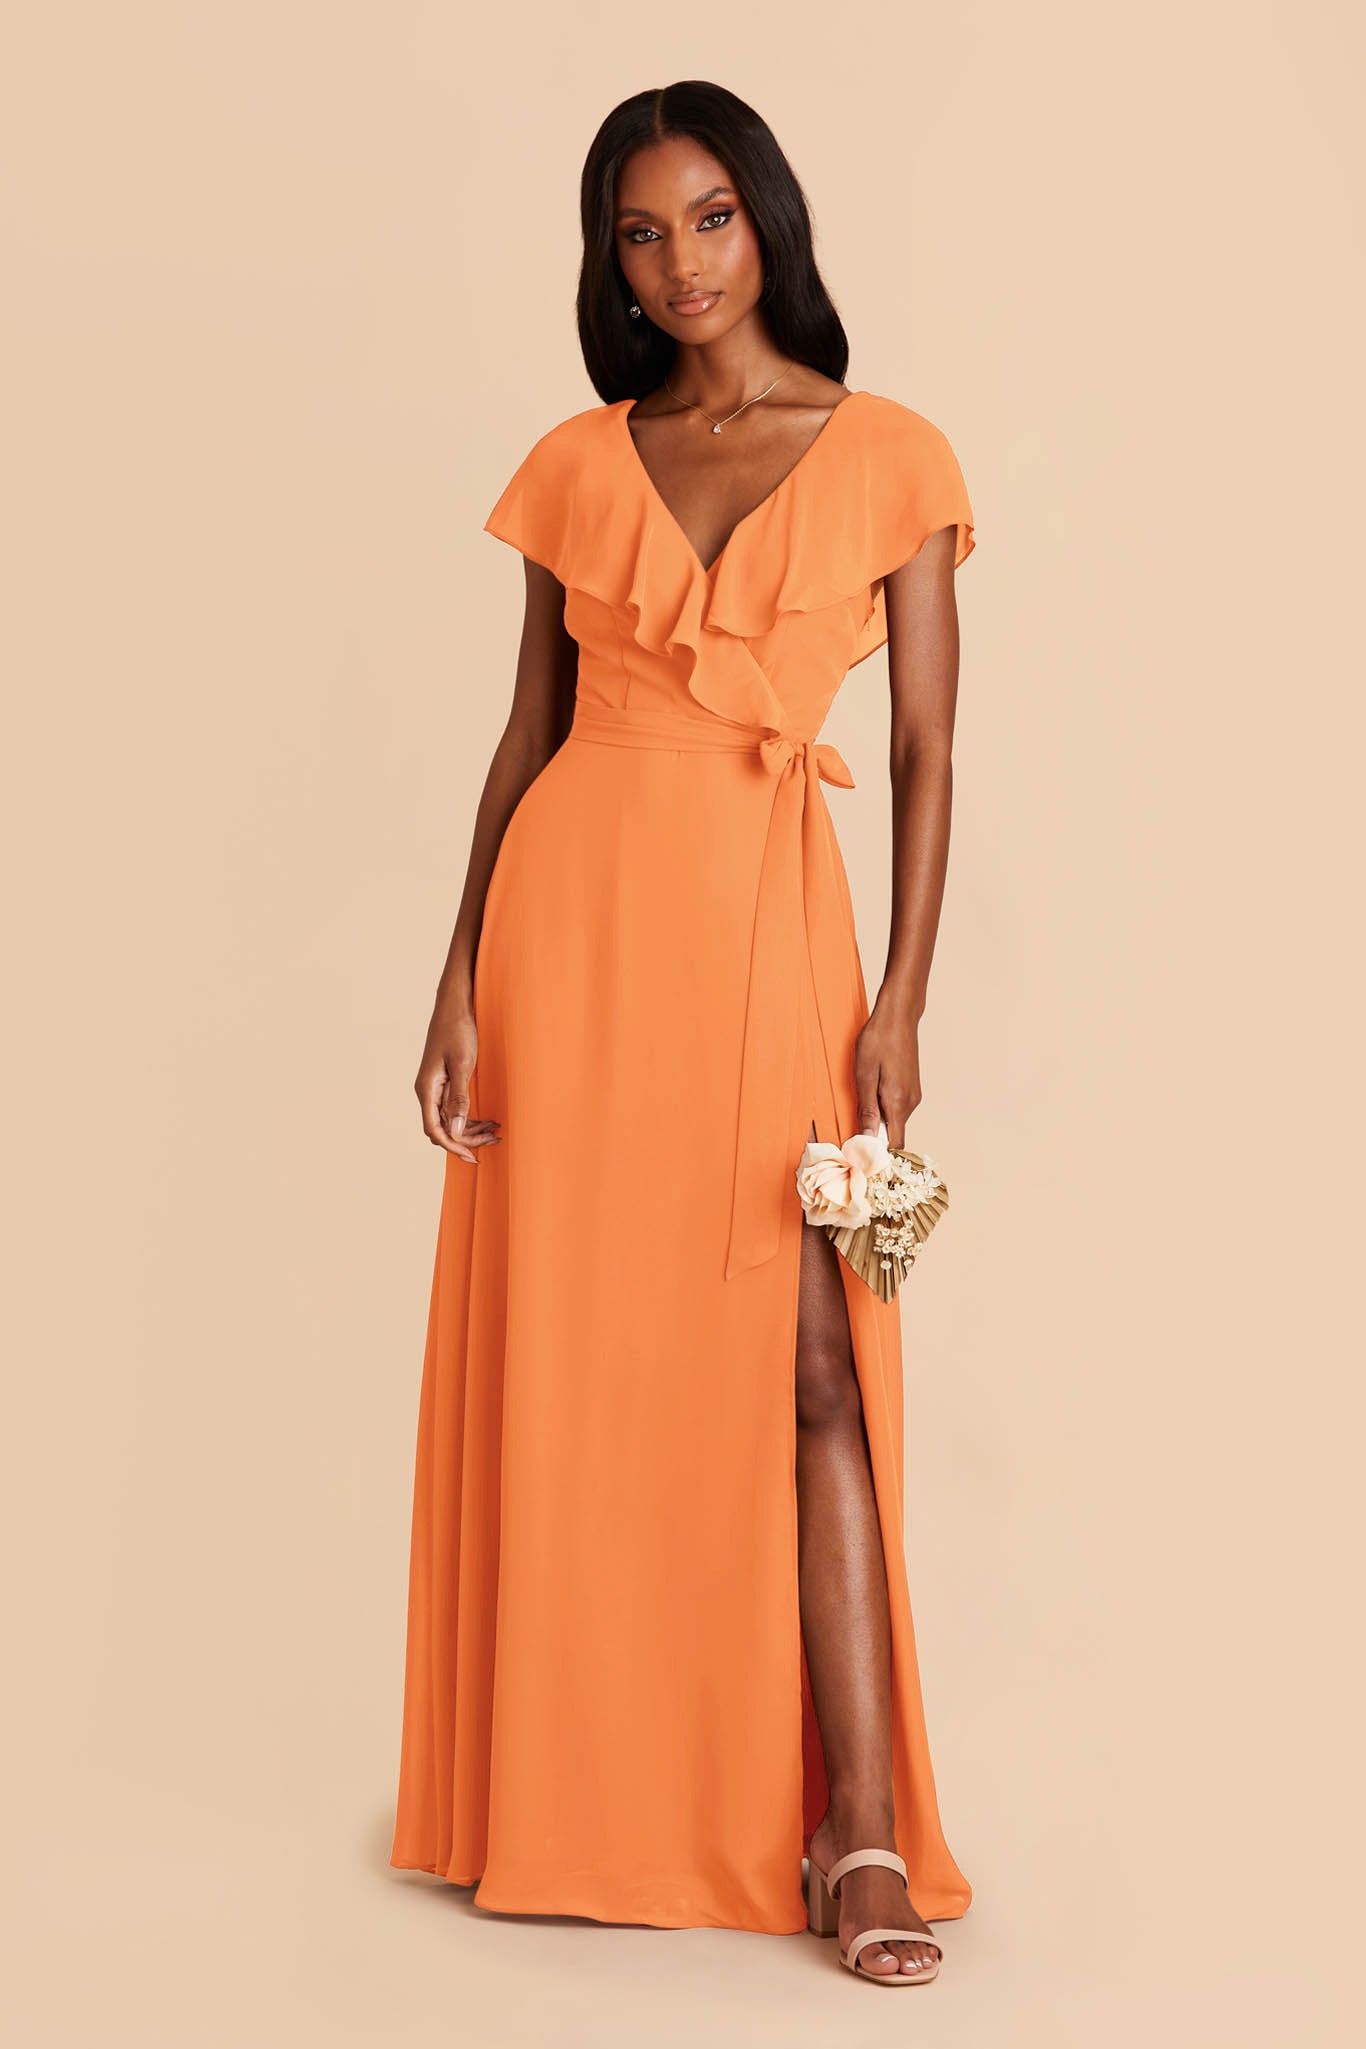 Apricot Chiffon Dress by Birdy Grey